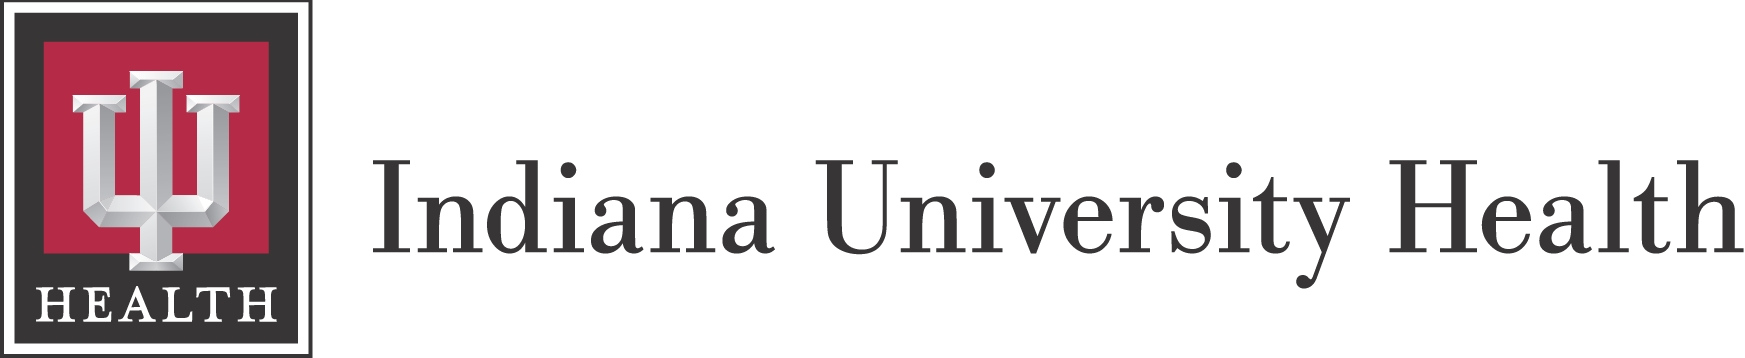 IU University Health logo (opens in new window)